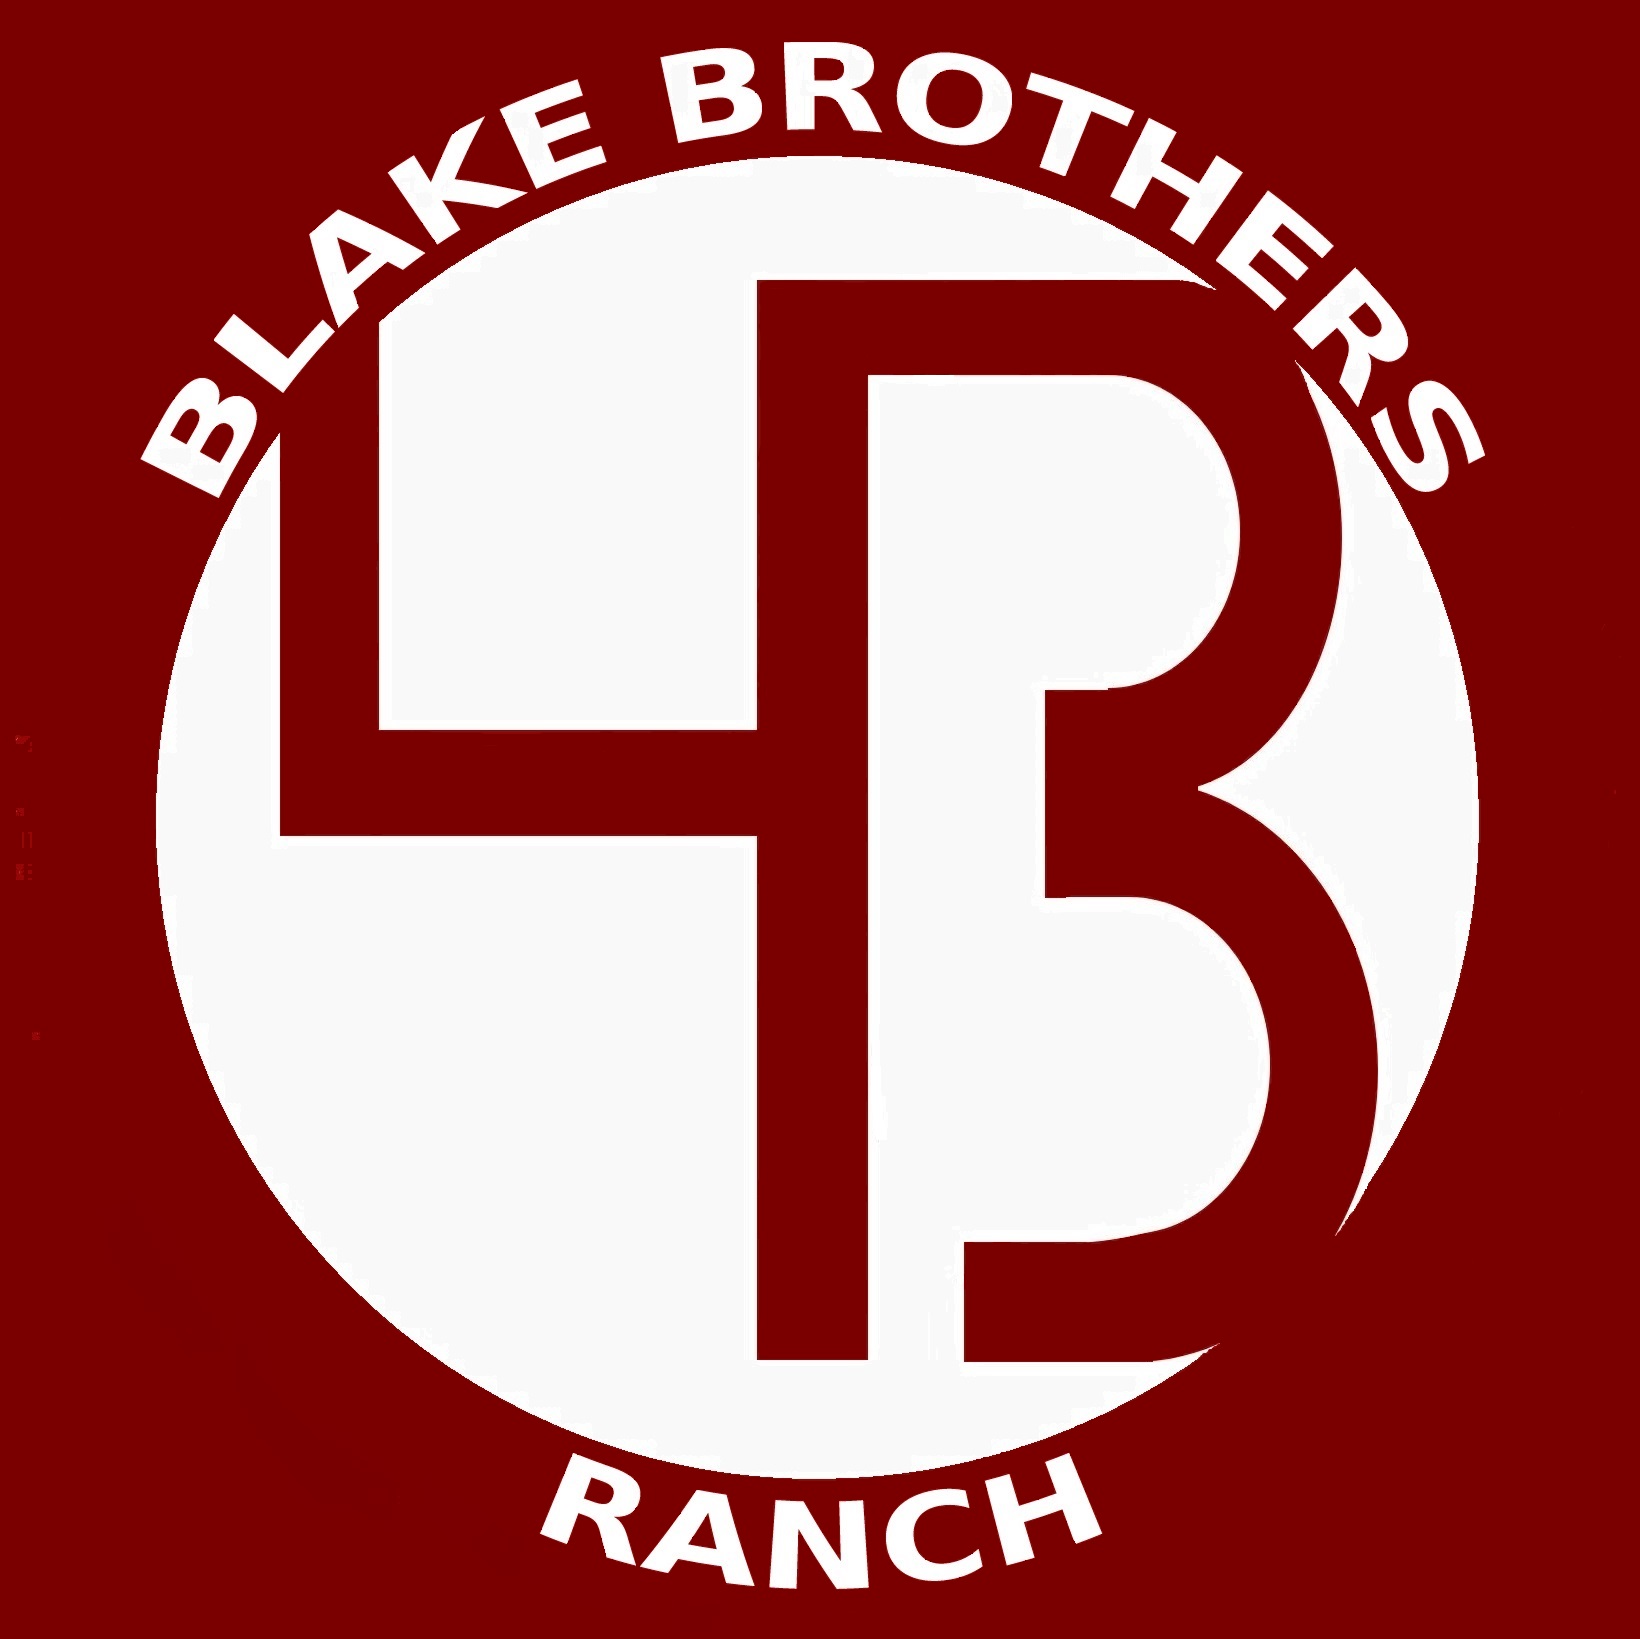 Blake Brothers Ranch Gypsies